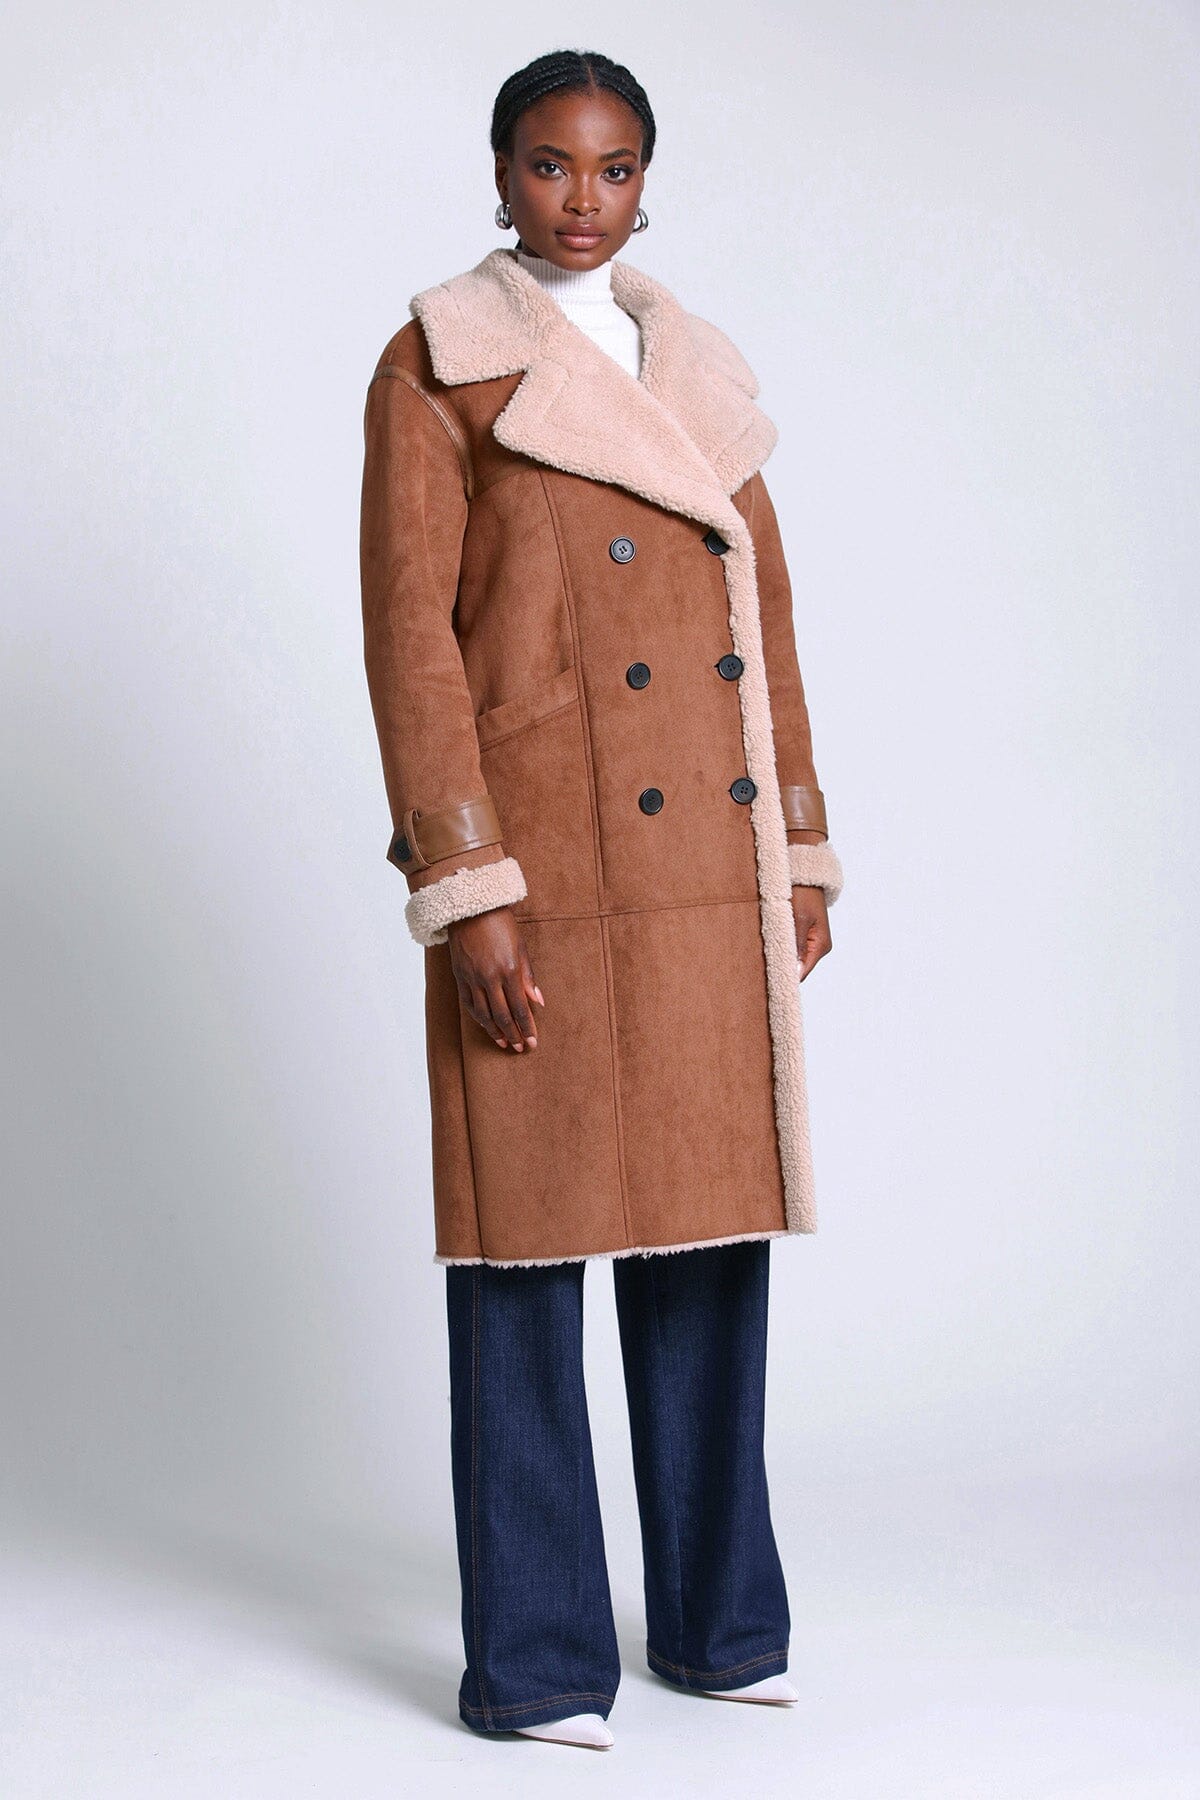 double breasted faux shearling coat outerwear fawn brown - figure flattering designer fashion cute long coats for women